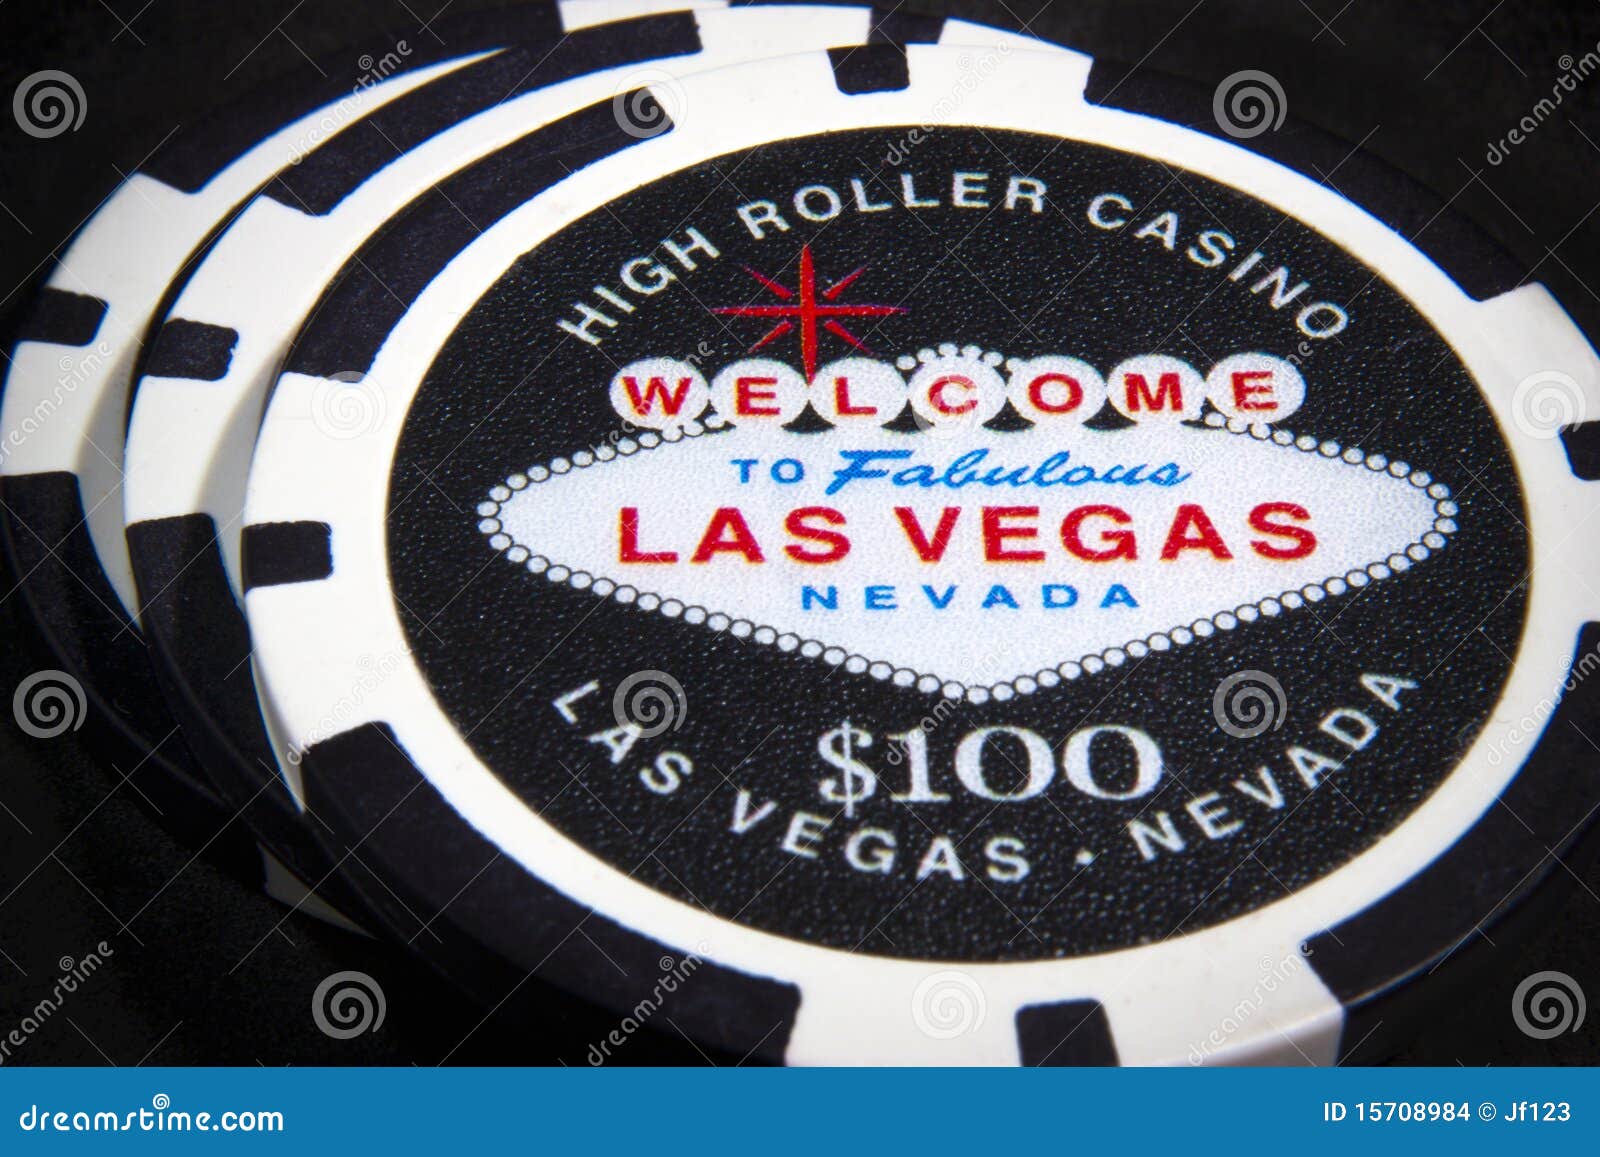 Sunrise Casino $1.00 Casino Chip Las Vegas Nevada 